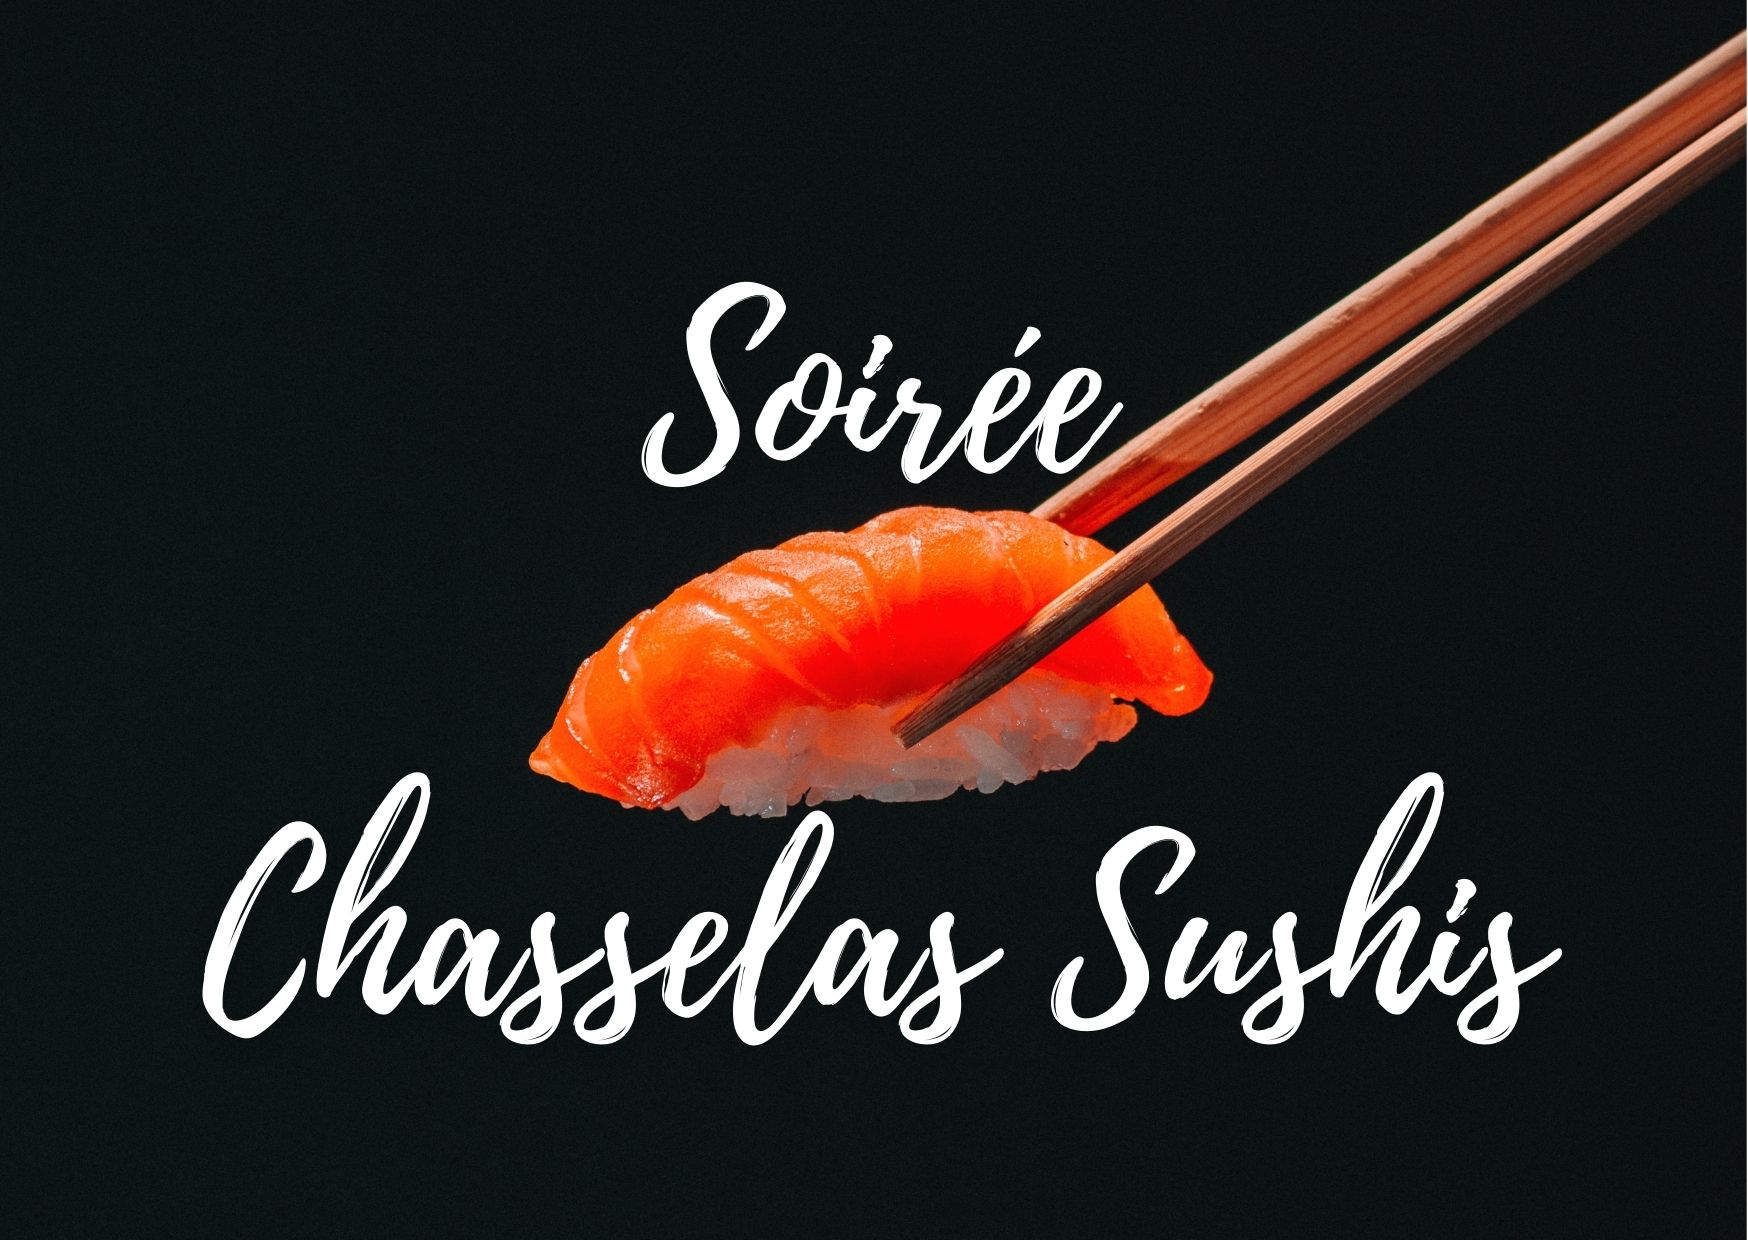 soiree sushis